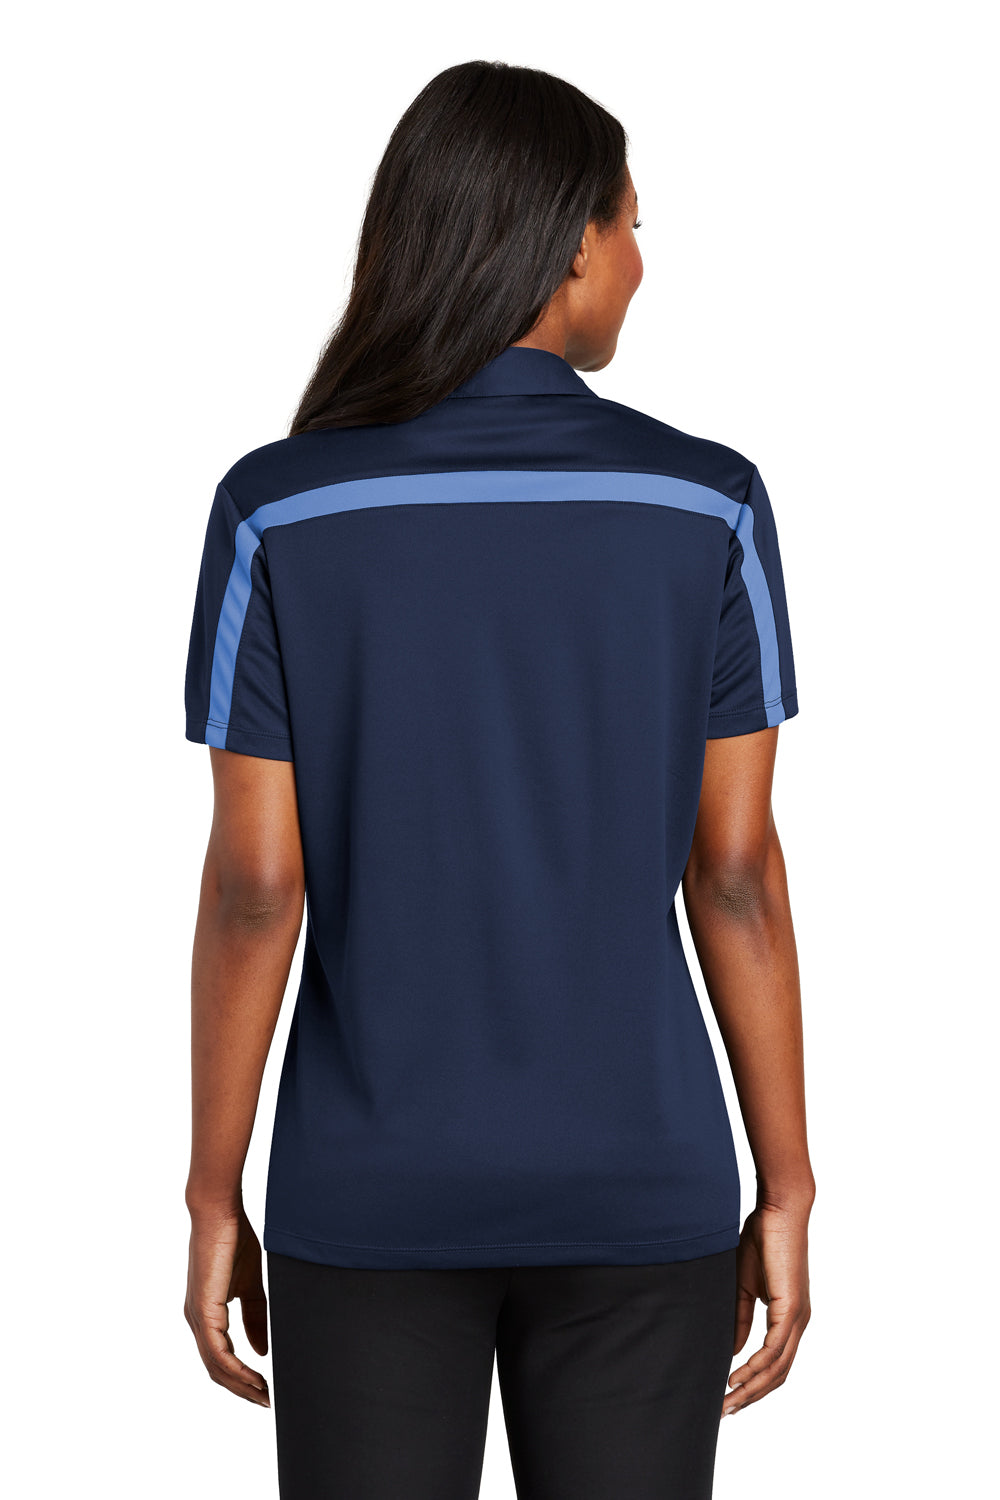 Port Authority L547 Womens Silk Touch Performance Moisture Wicking Short Sleeve Polo Shirt Navy Blue/Carolina Blue Back